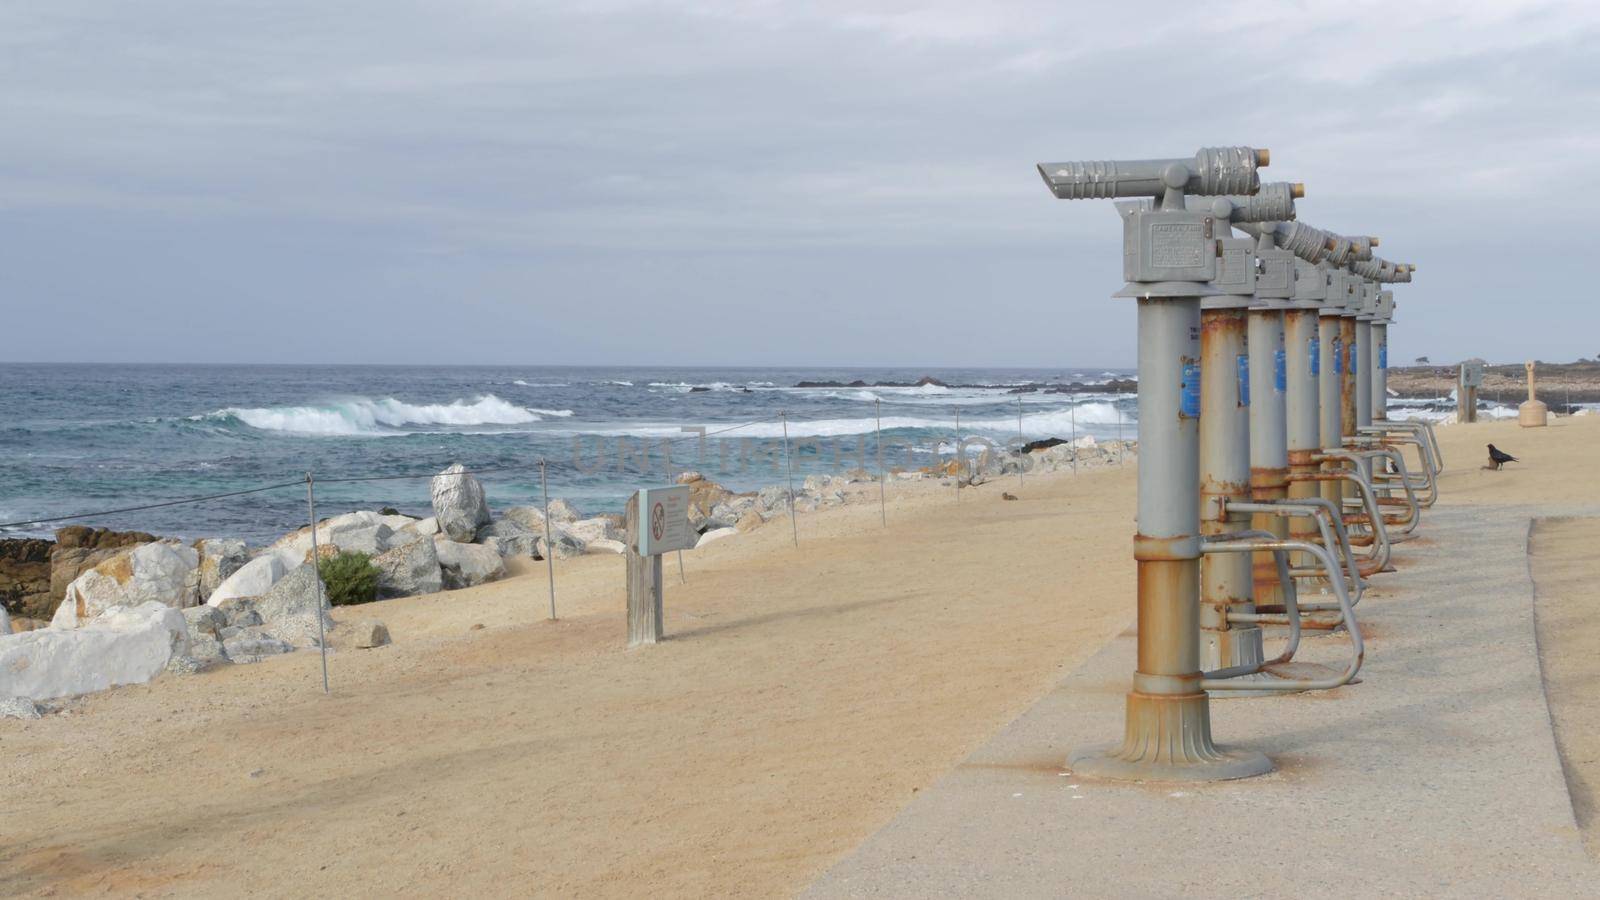 Stationary binoculars, telescope, tower viewer or scope, ocean waves on rocky craggy beach. Magnifier or spyglass row, 17-mile drive tourist viewpoint, Monterey, California USA. Bird Rock Vista Point.